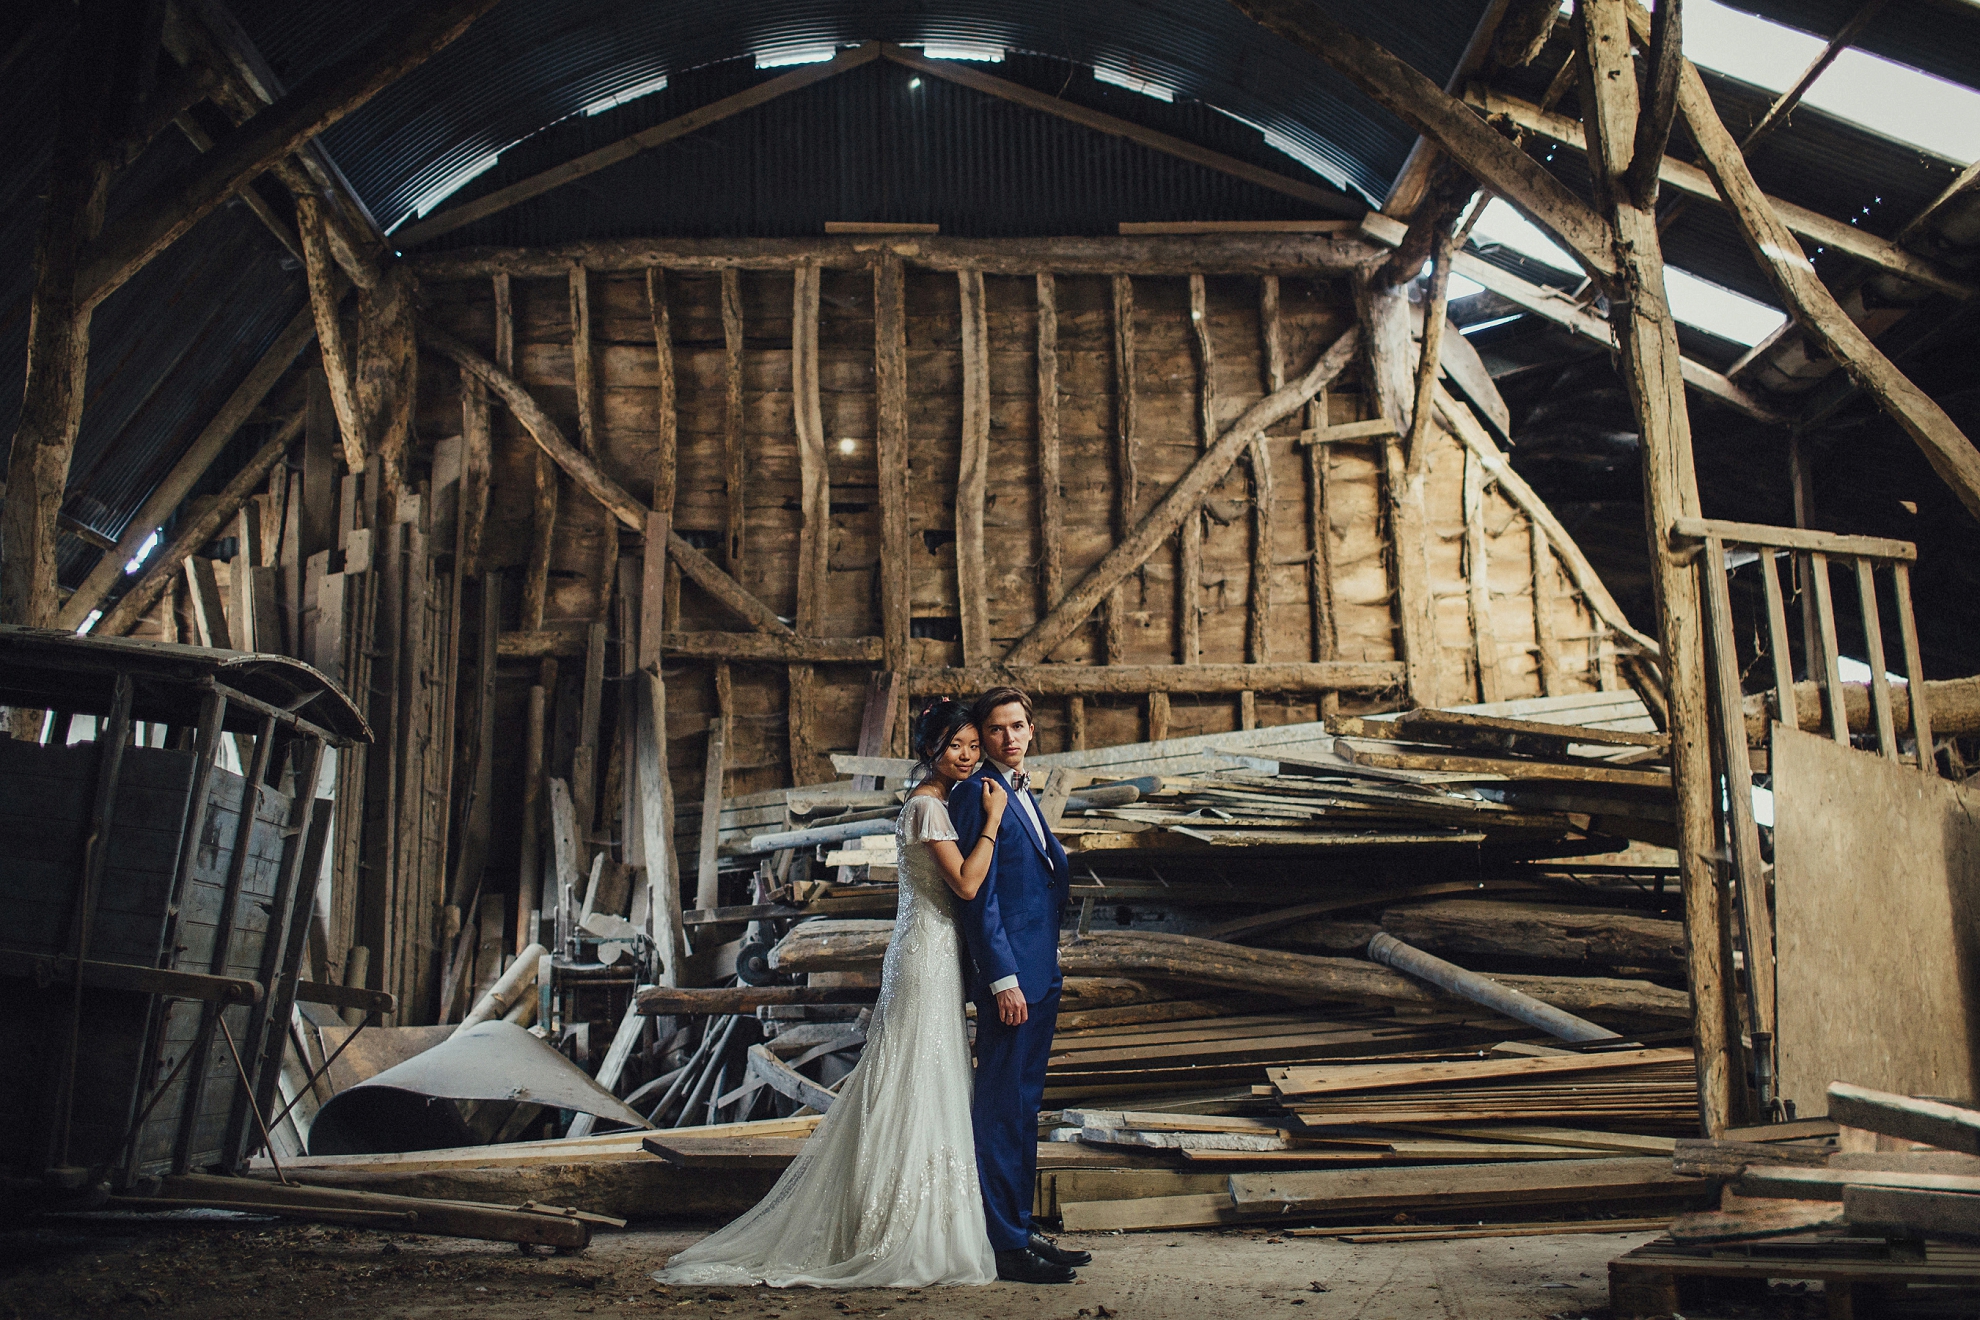 Manor barn weddings